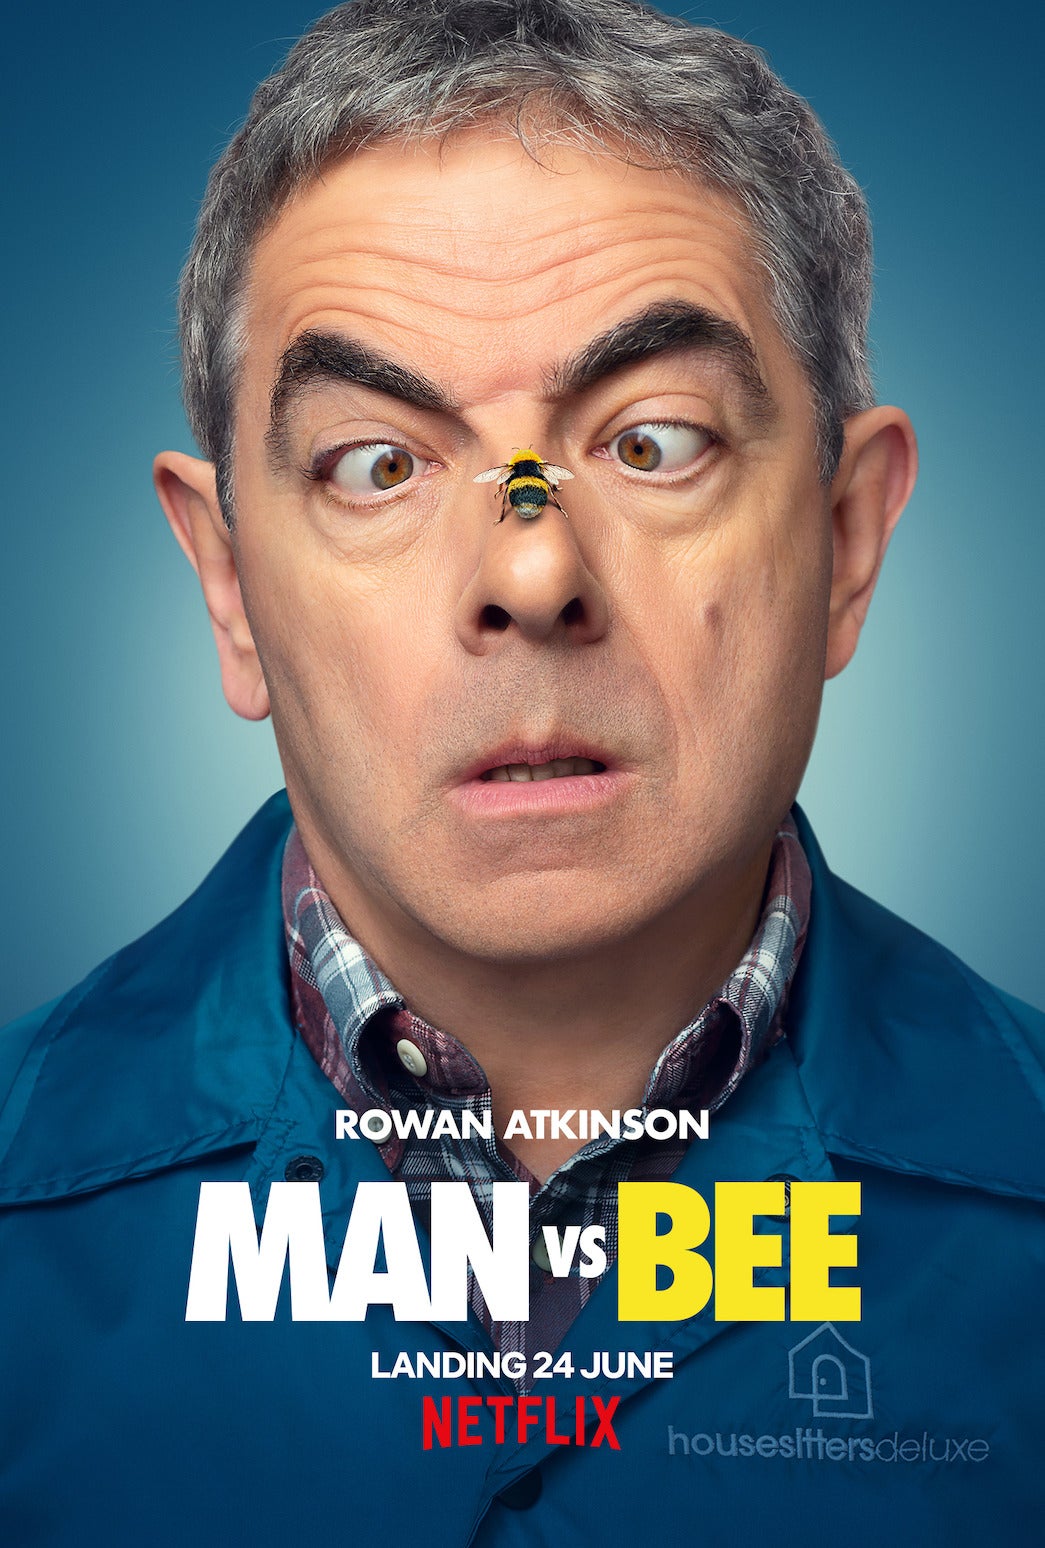 TV ratings for Man VS. Bee in Noruega. Netflix TV series